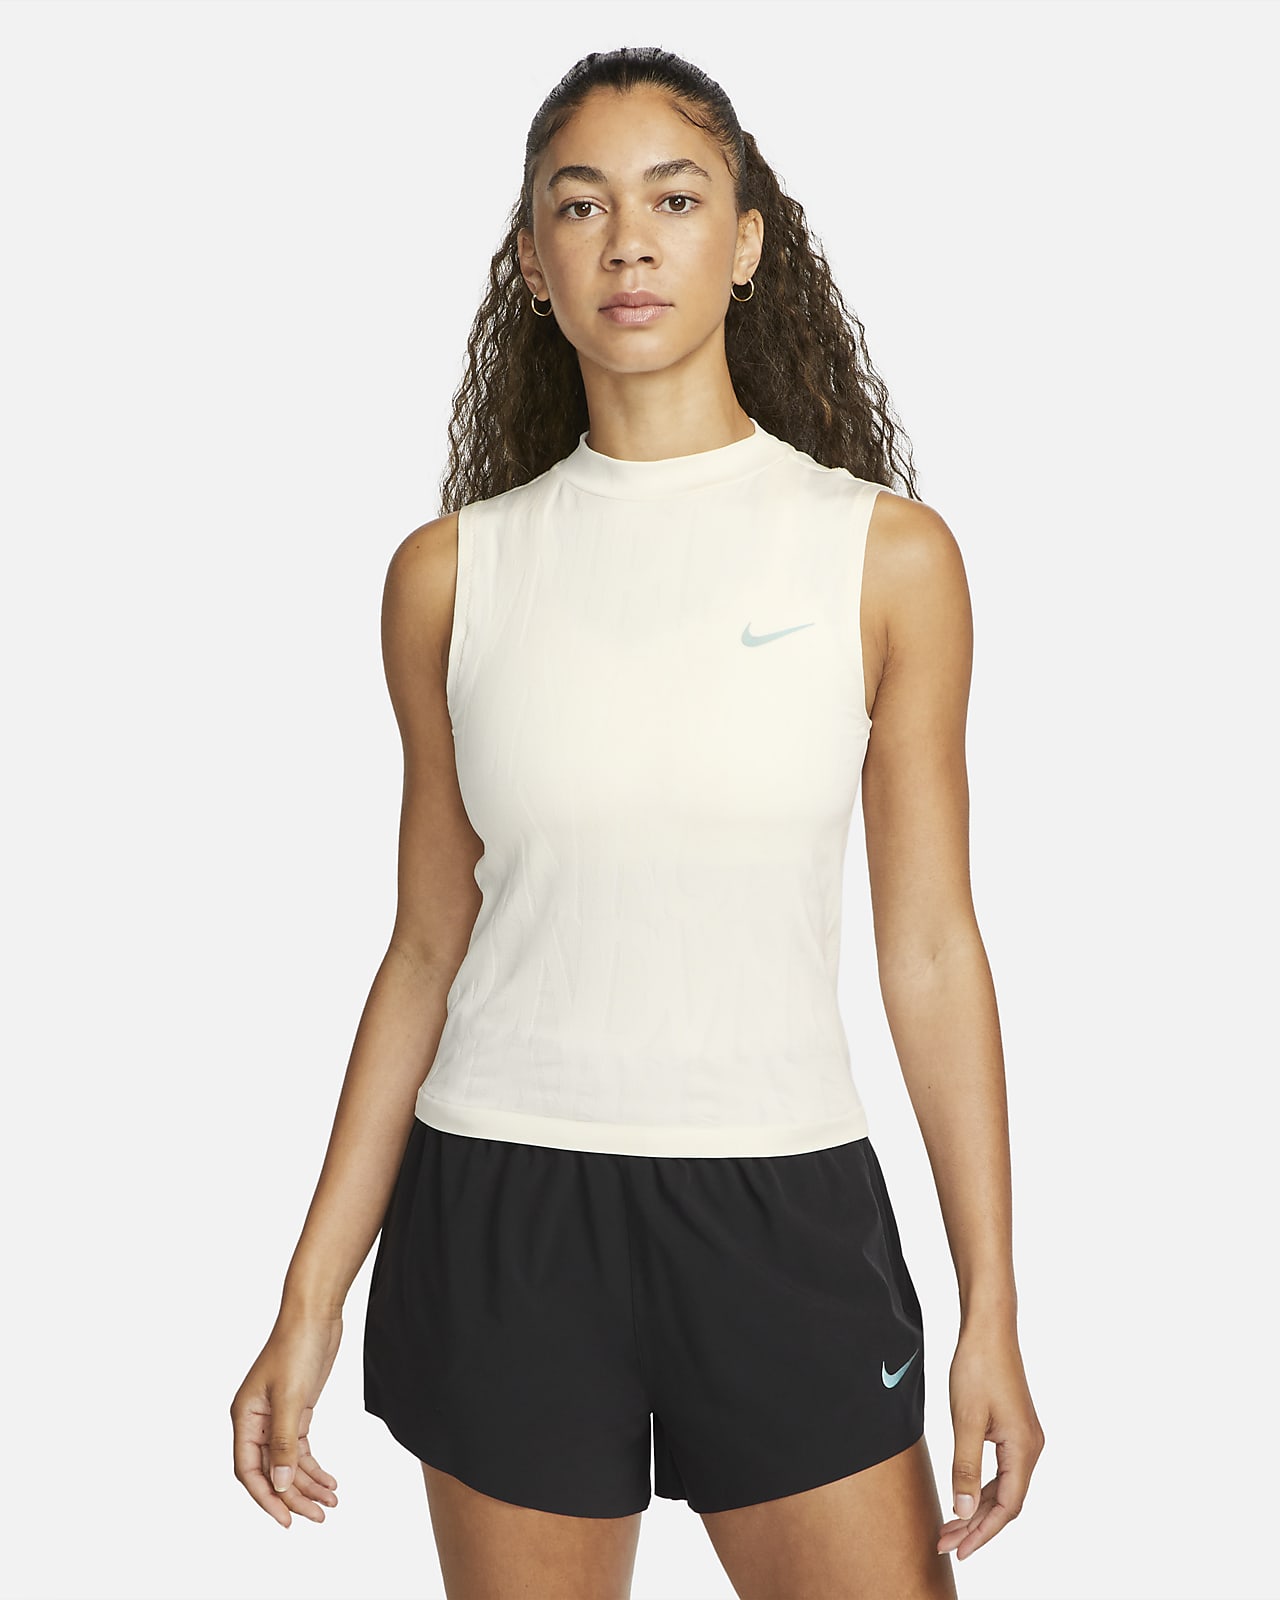 Women's Tank Tops & Sleeveless Tops. Nike CA